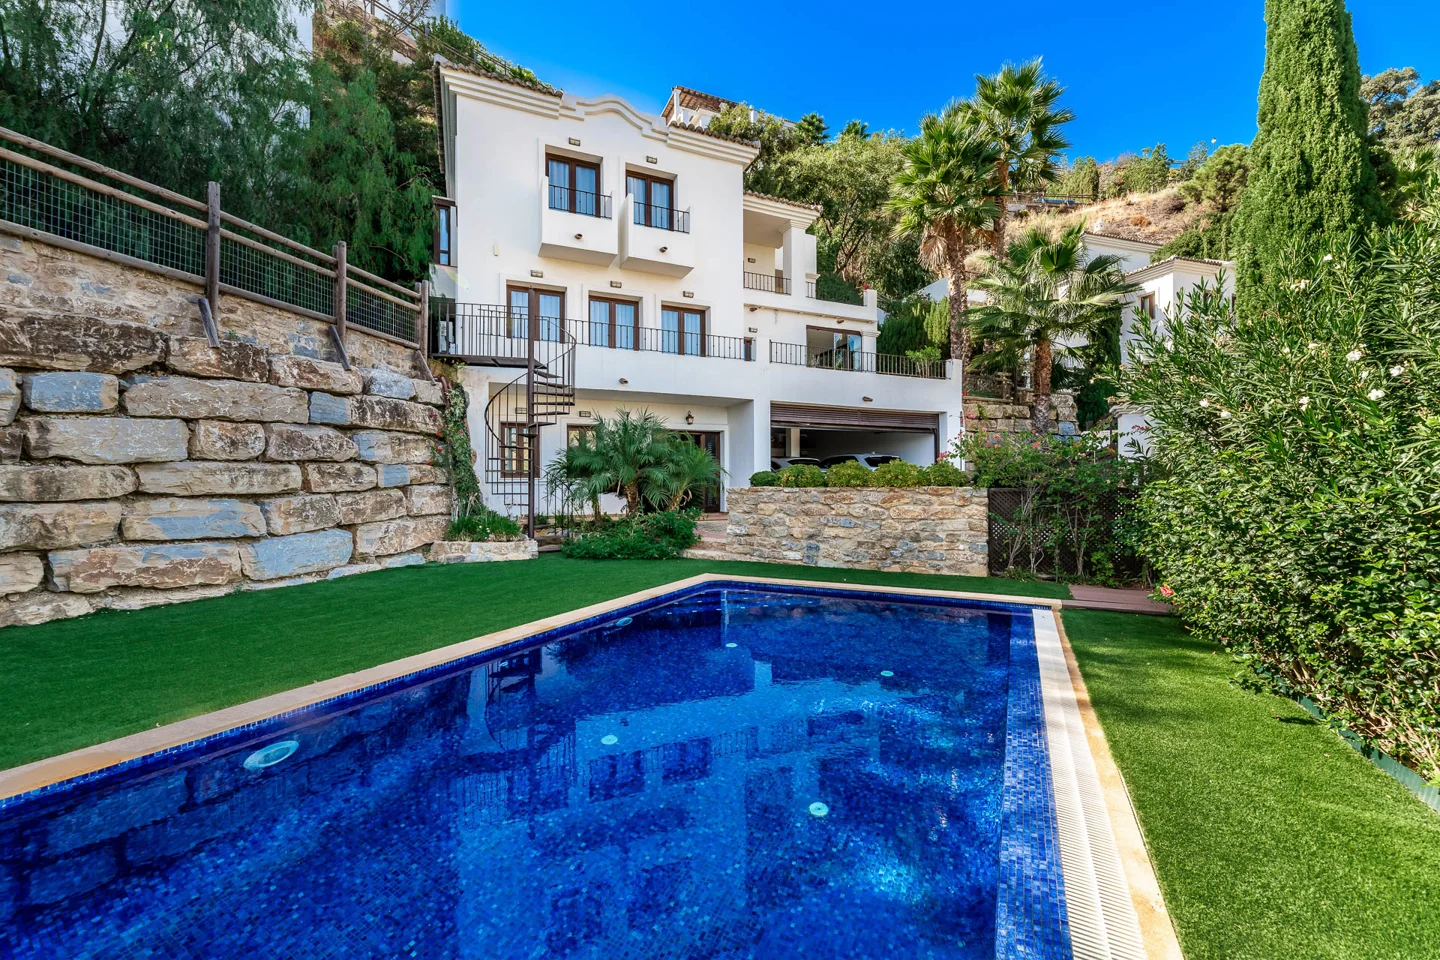 Benahavis Town: Villa de estilo andaluz con vistas panorámicas